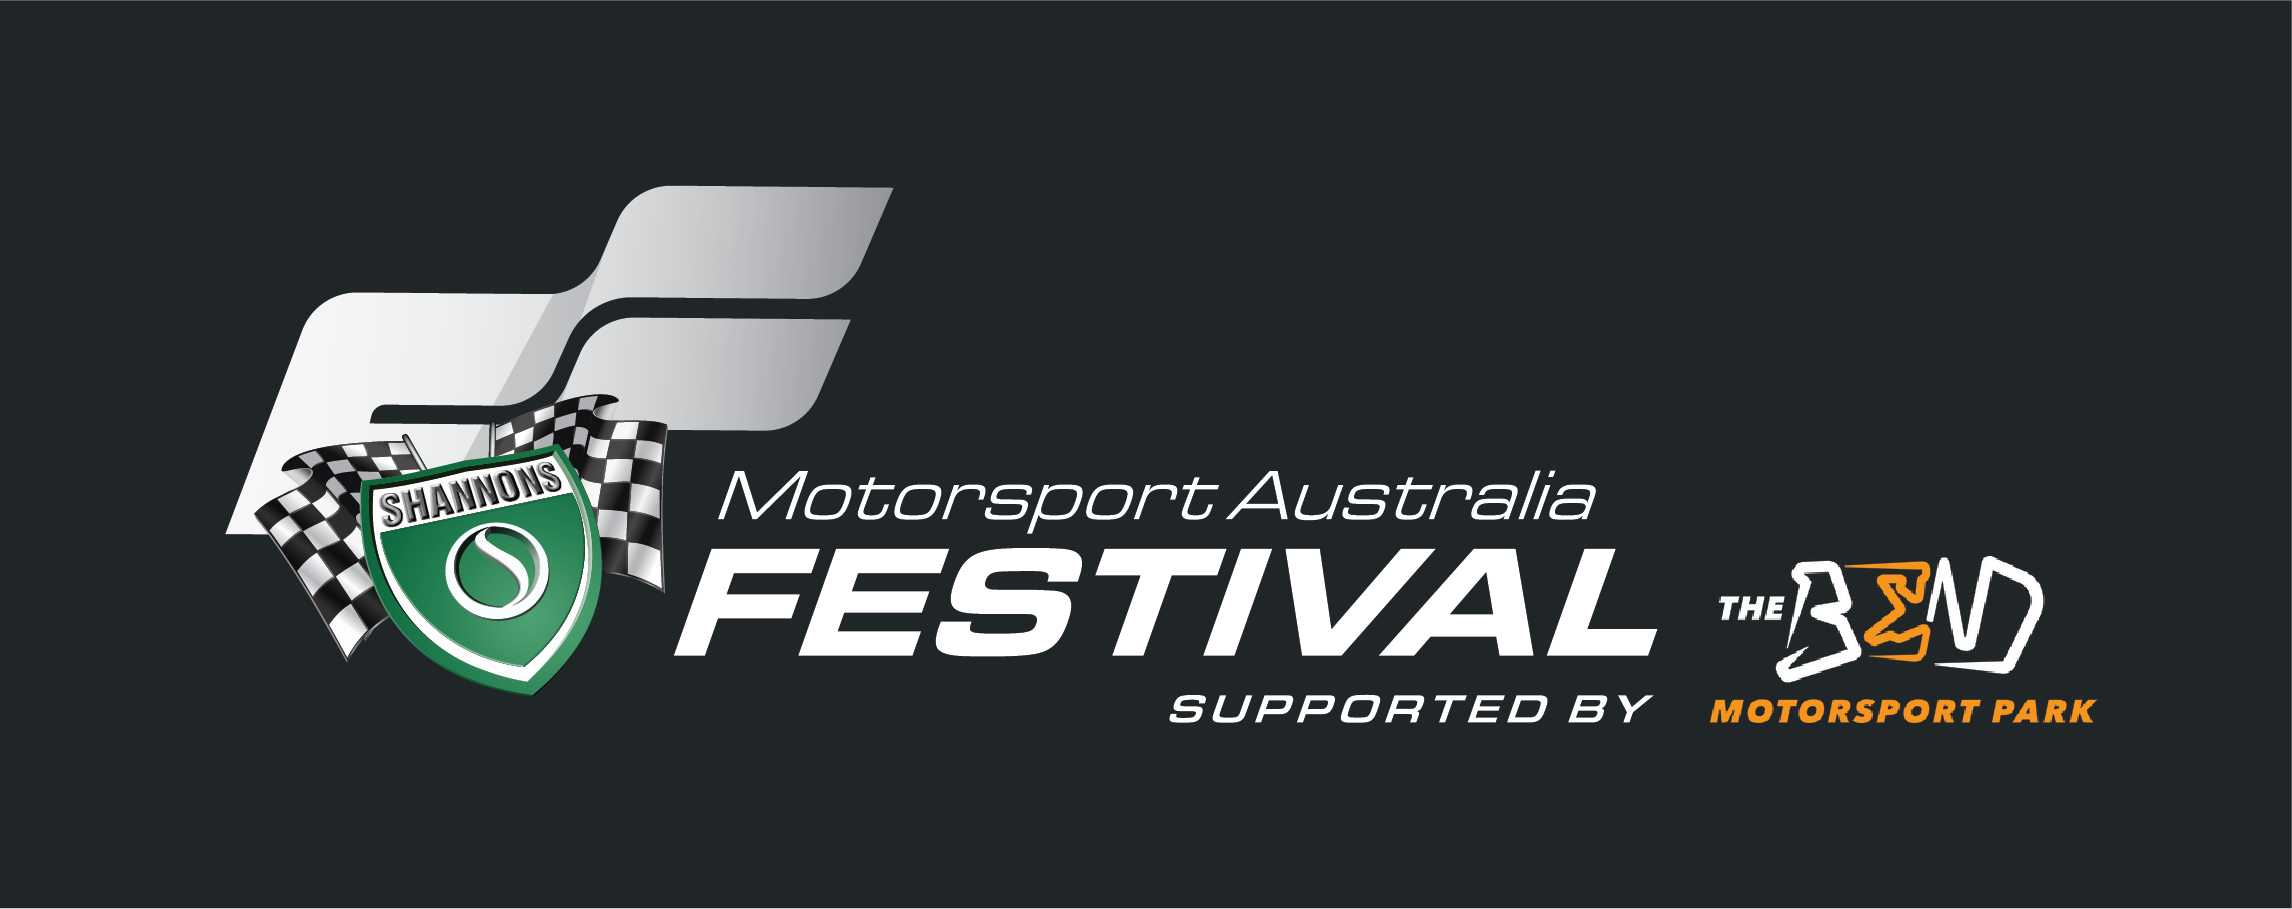 Shannons Motorsport Australia Festival_The Bend-Web